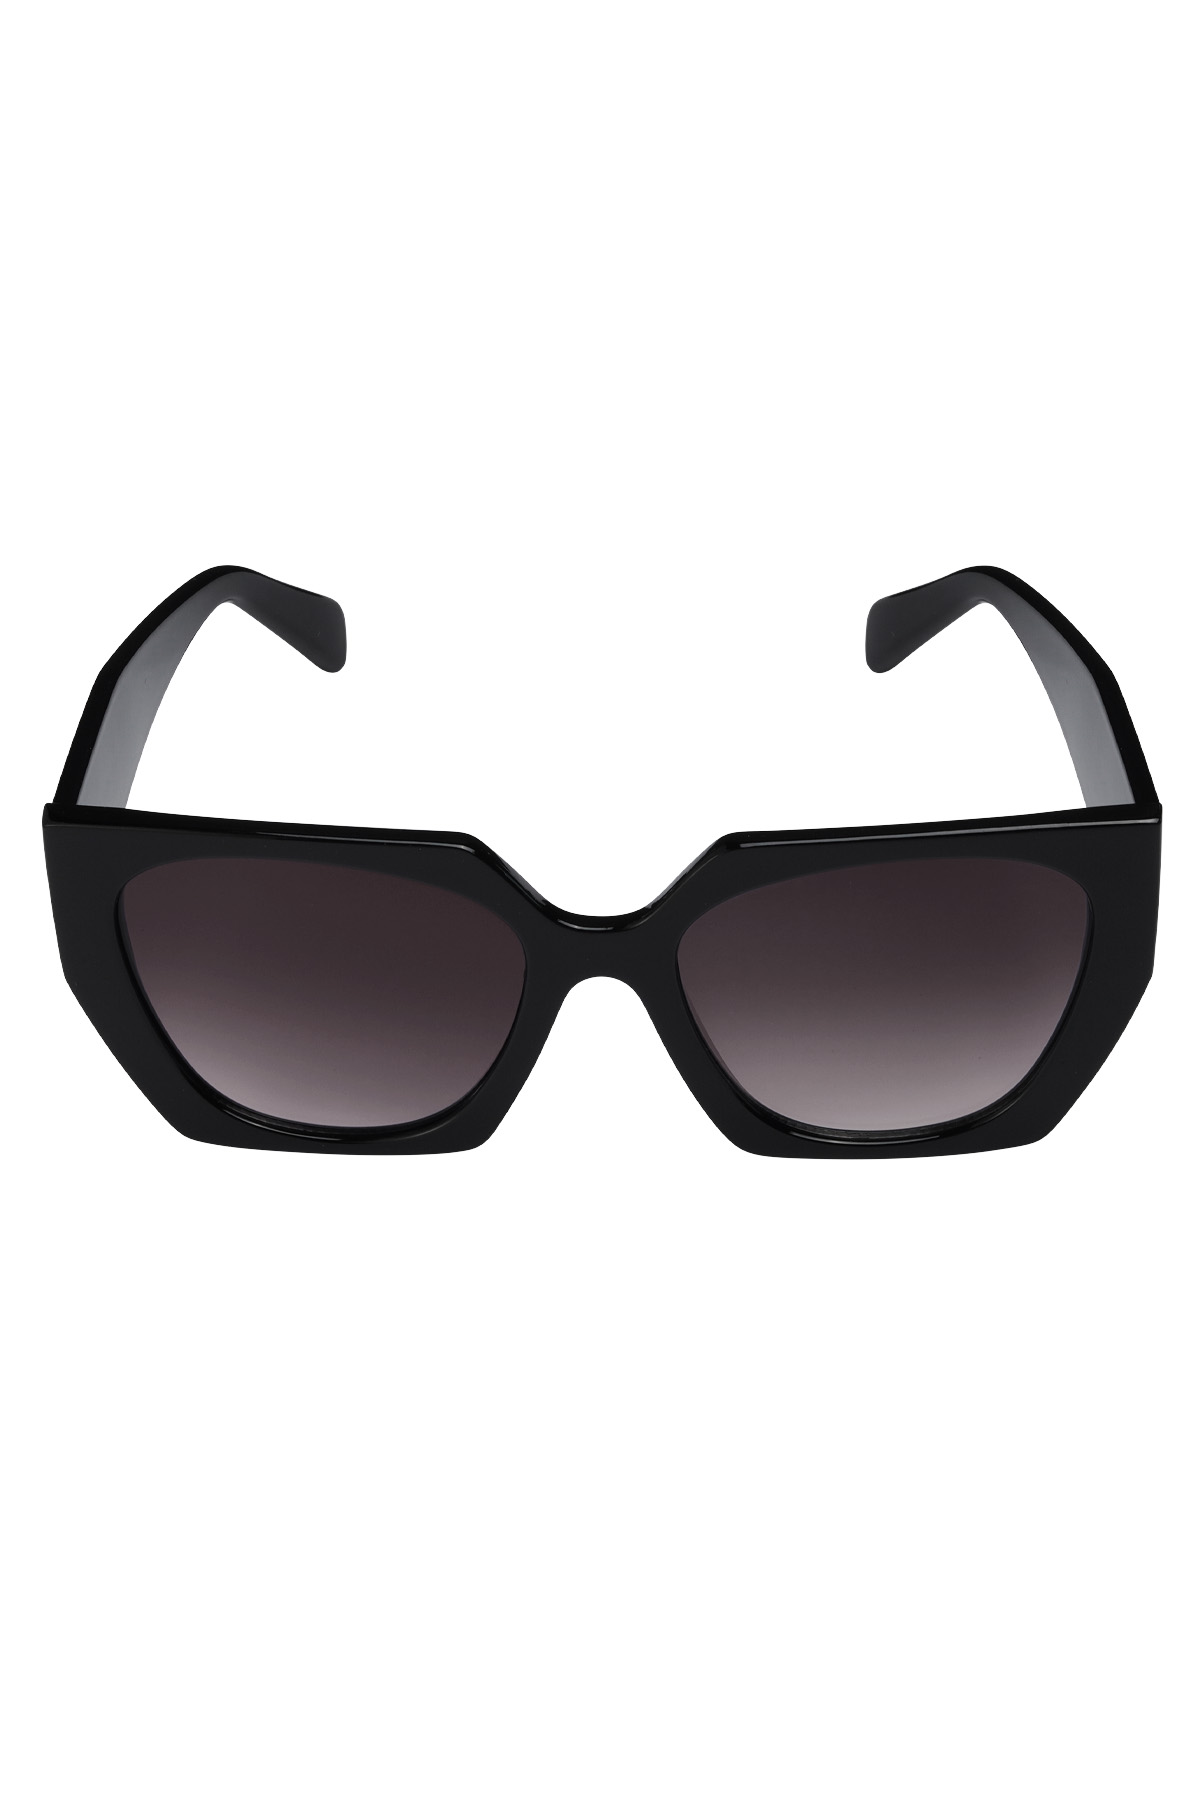 Trendy angular sunglasses - black h5 